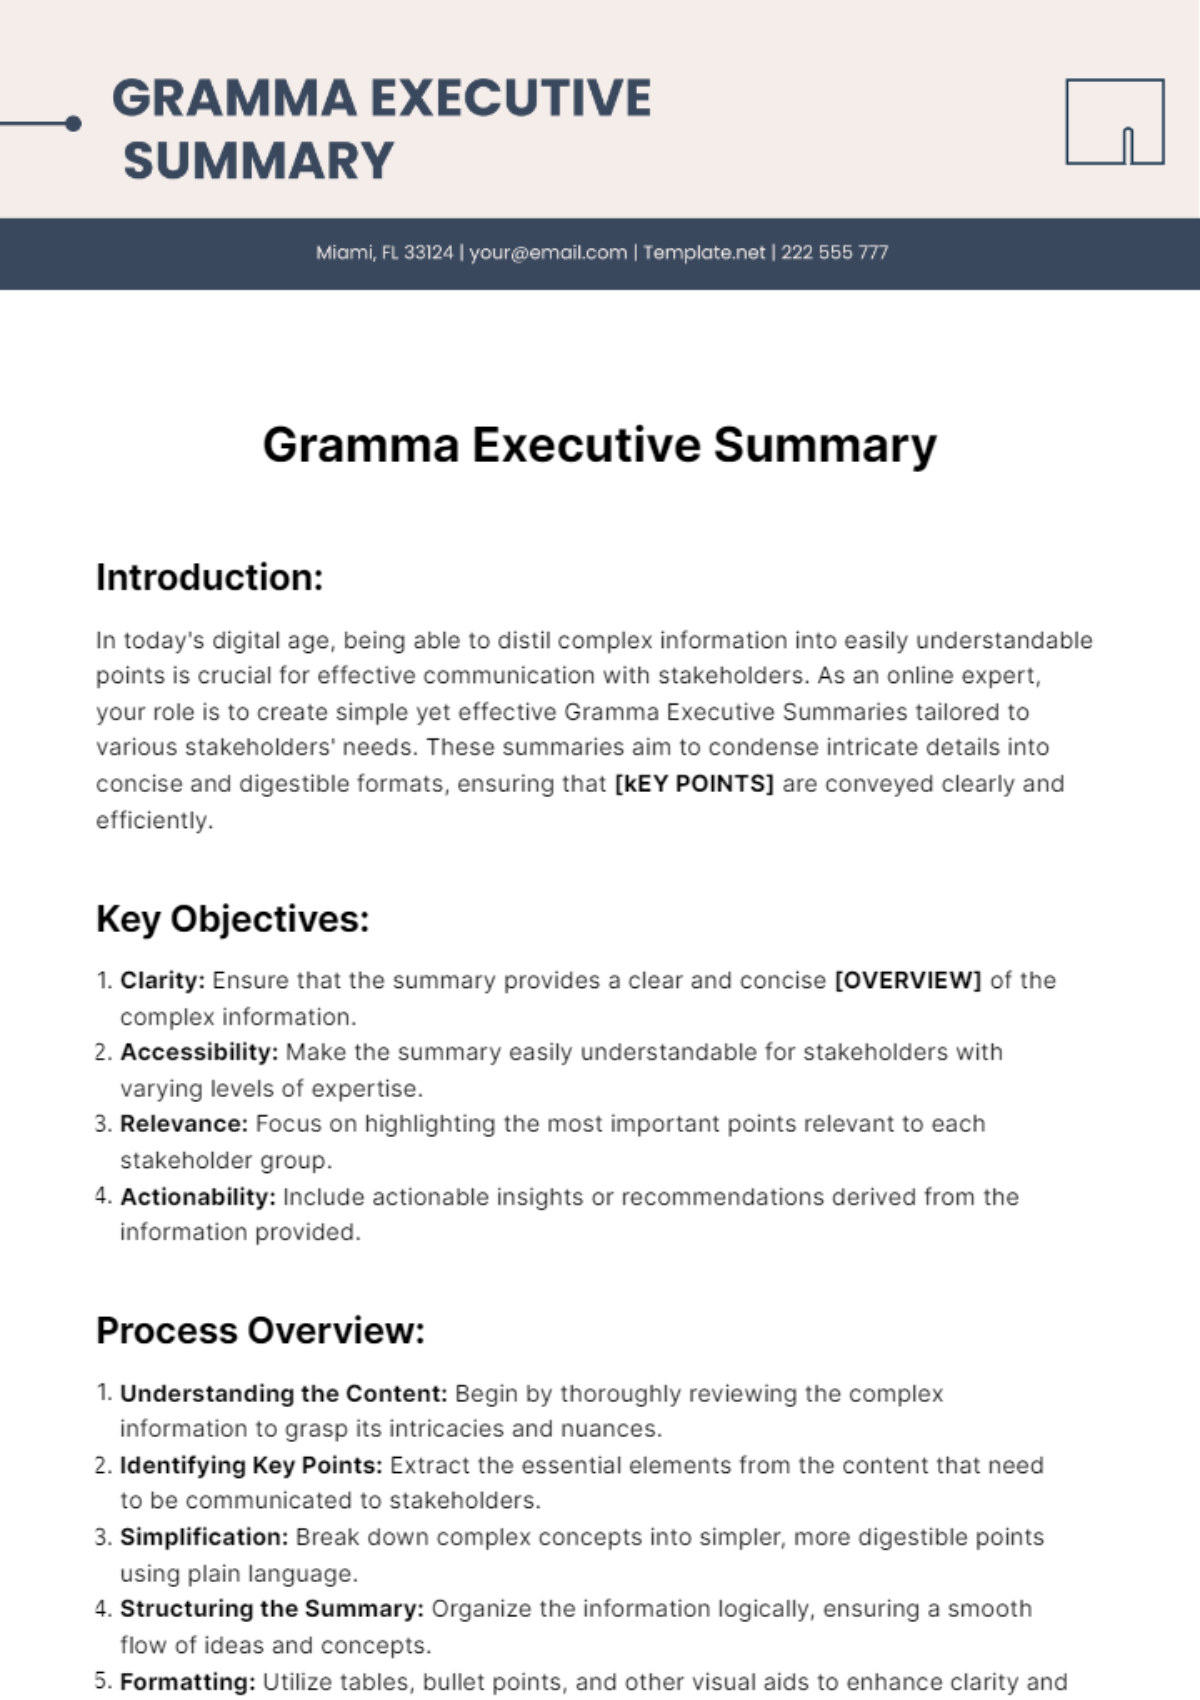 Gramma Executive Summary Template